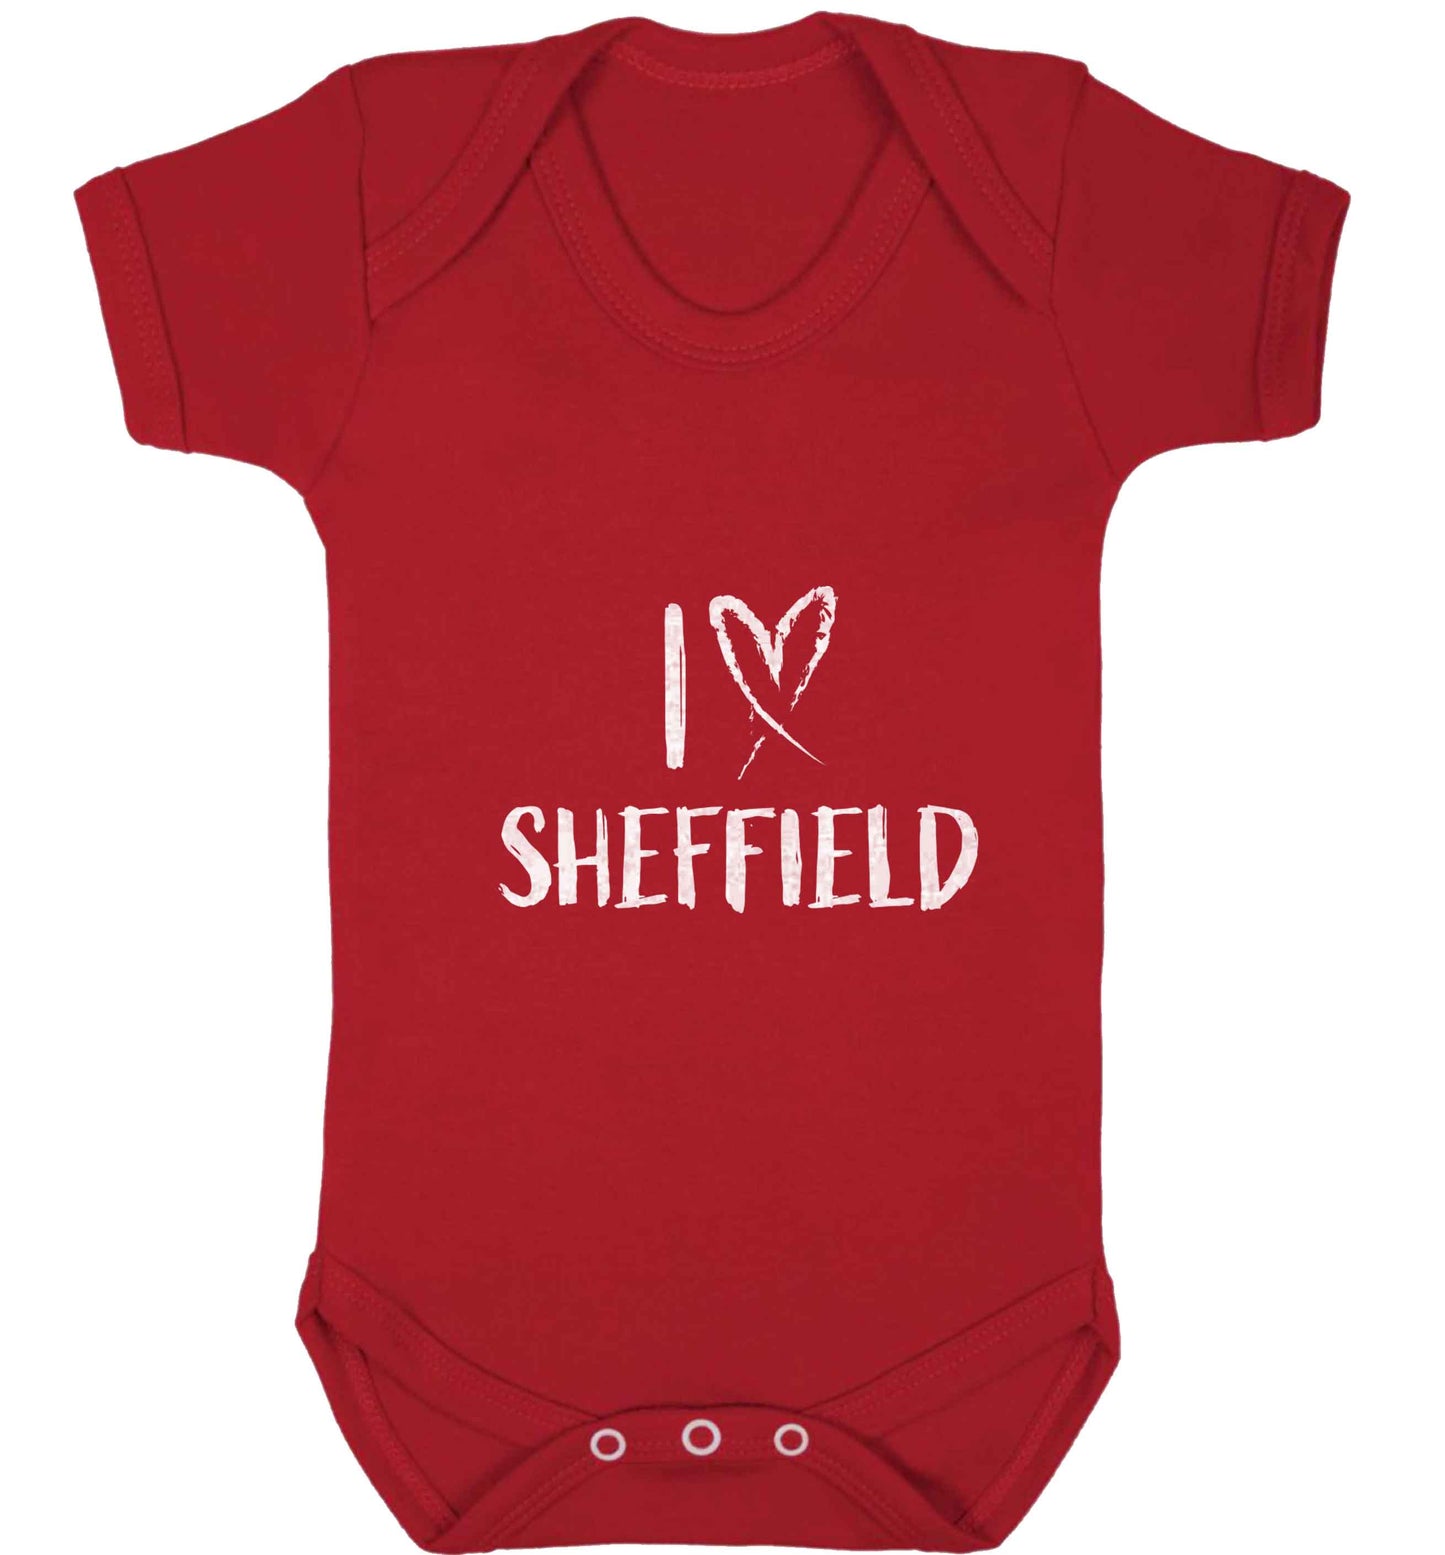 I love Sheffield baby vest red 18-24 months